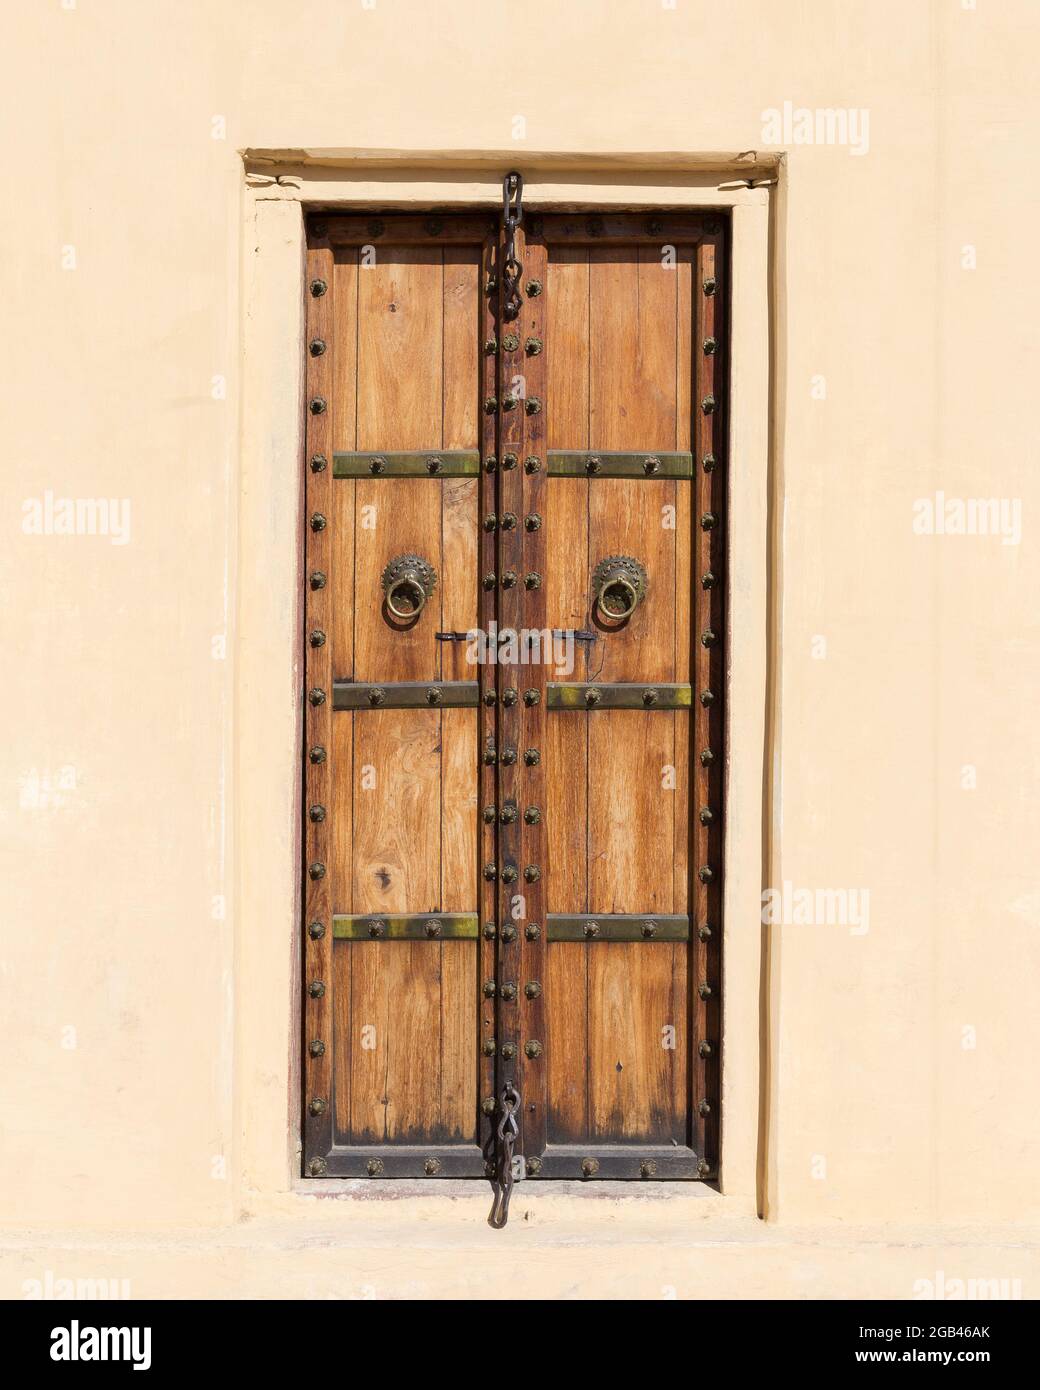 Old Wooden Door in India with metal pins. Stock Photo